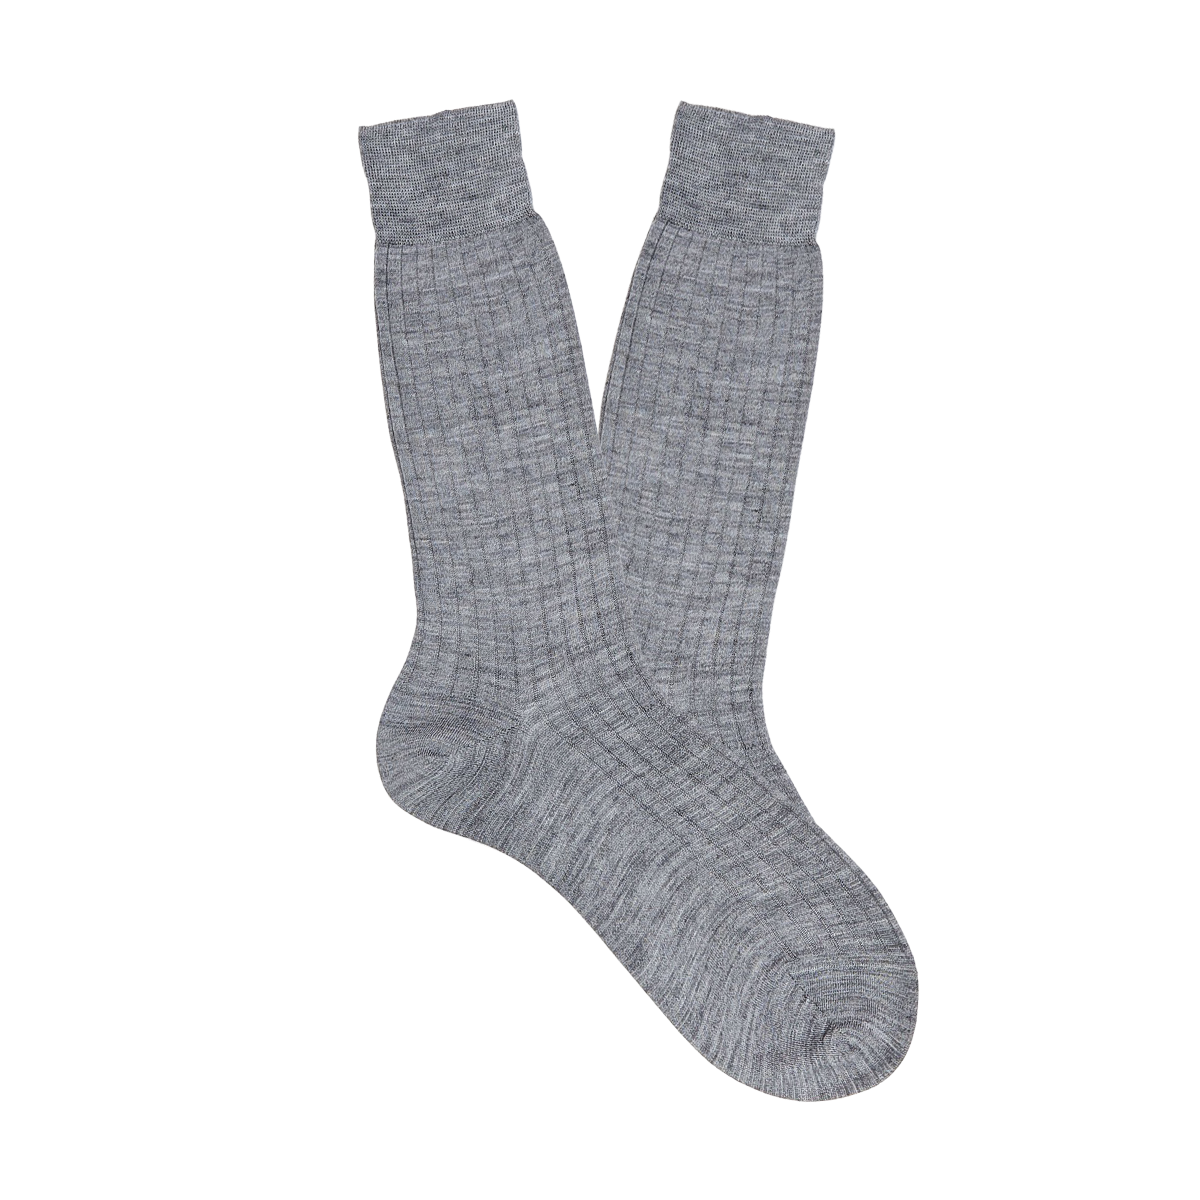 Bresciani Light Grey Ribbed Wool Nylon Socks Feature